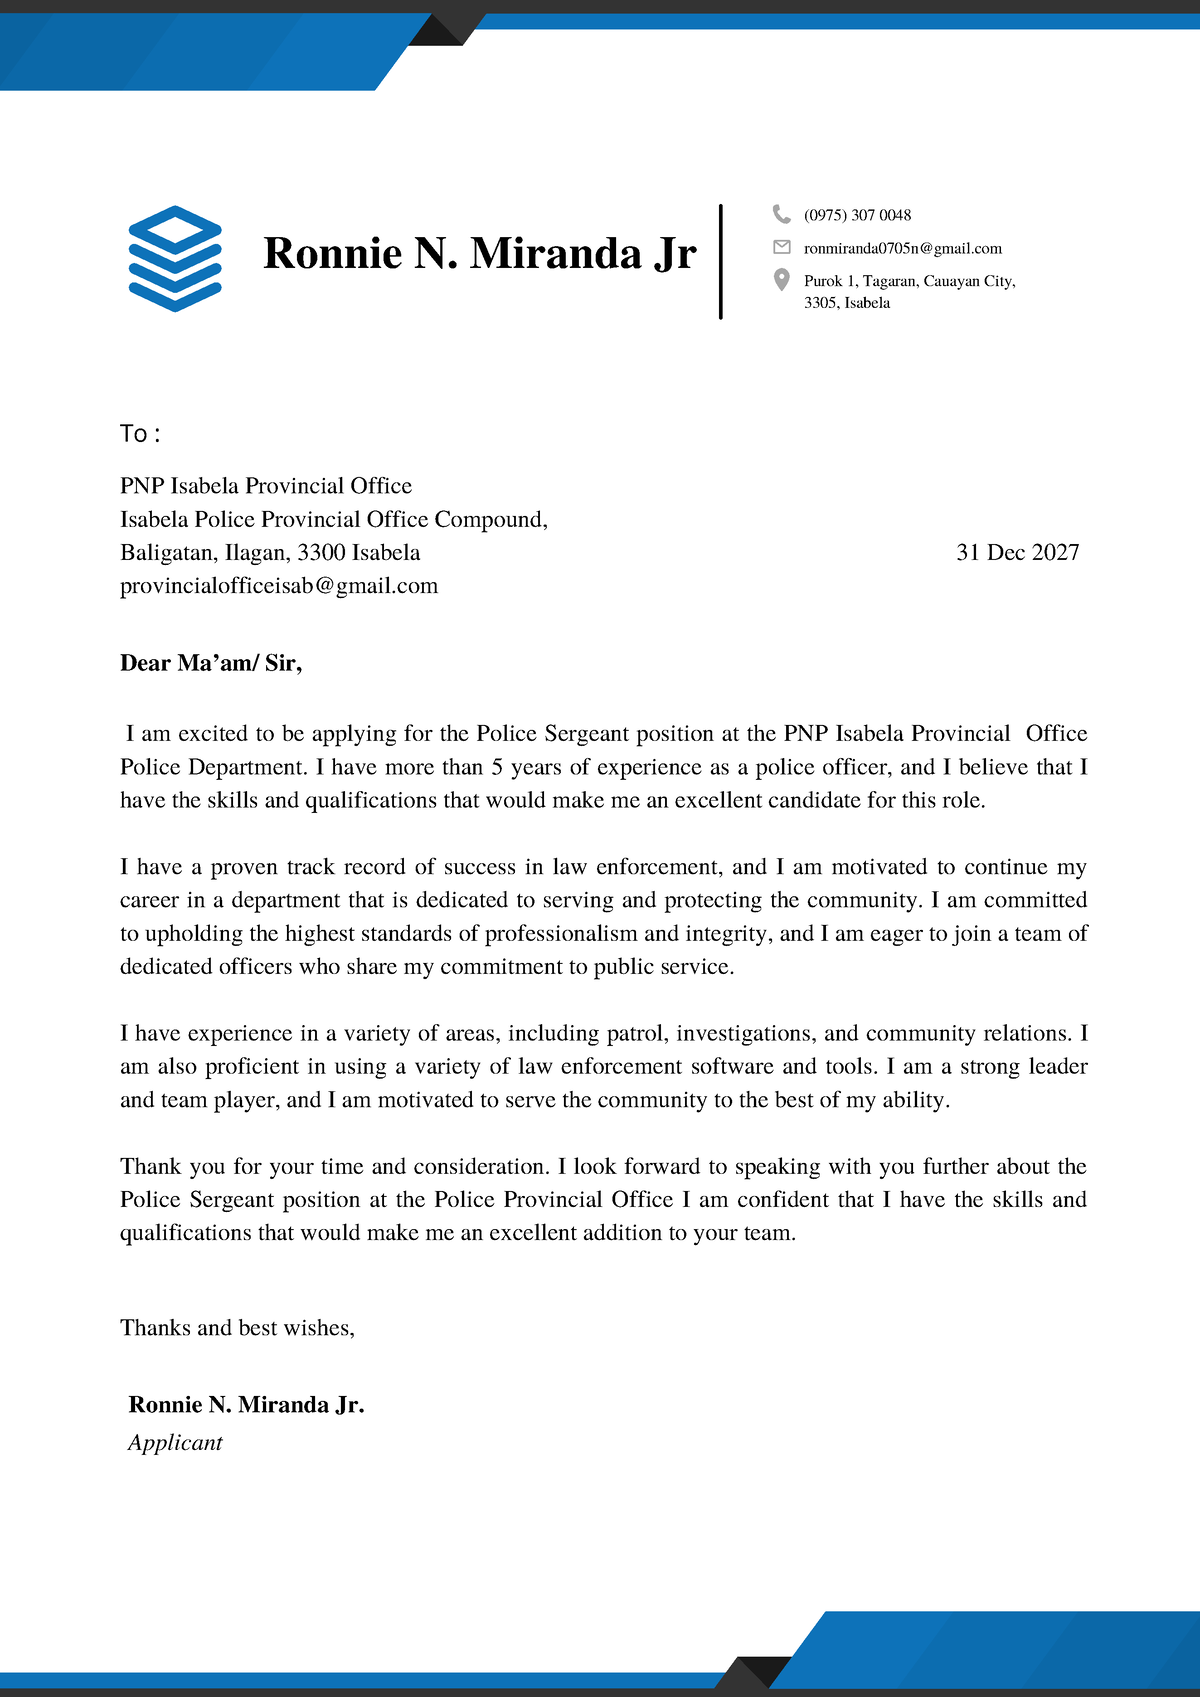 application letter in pnp